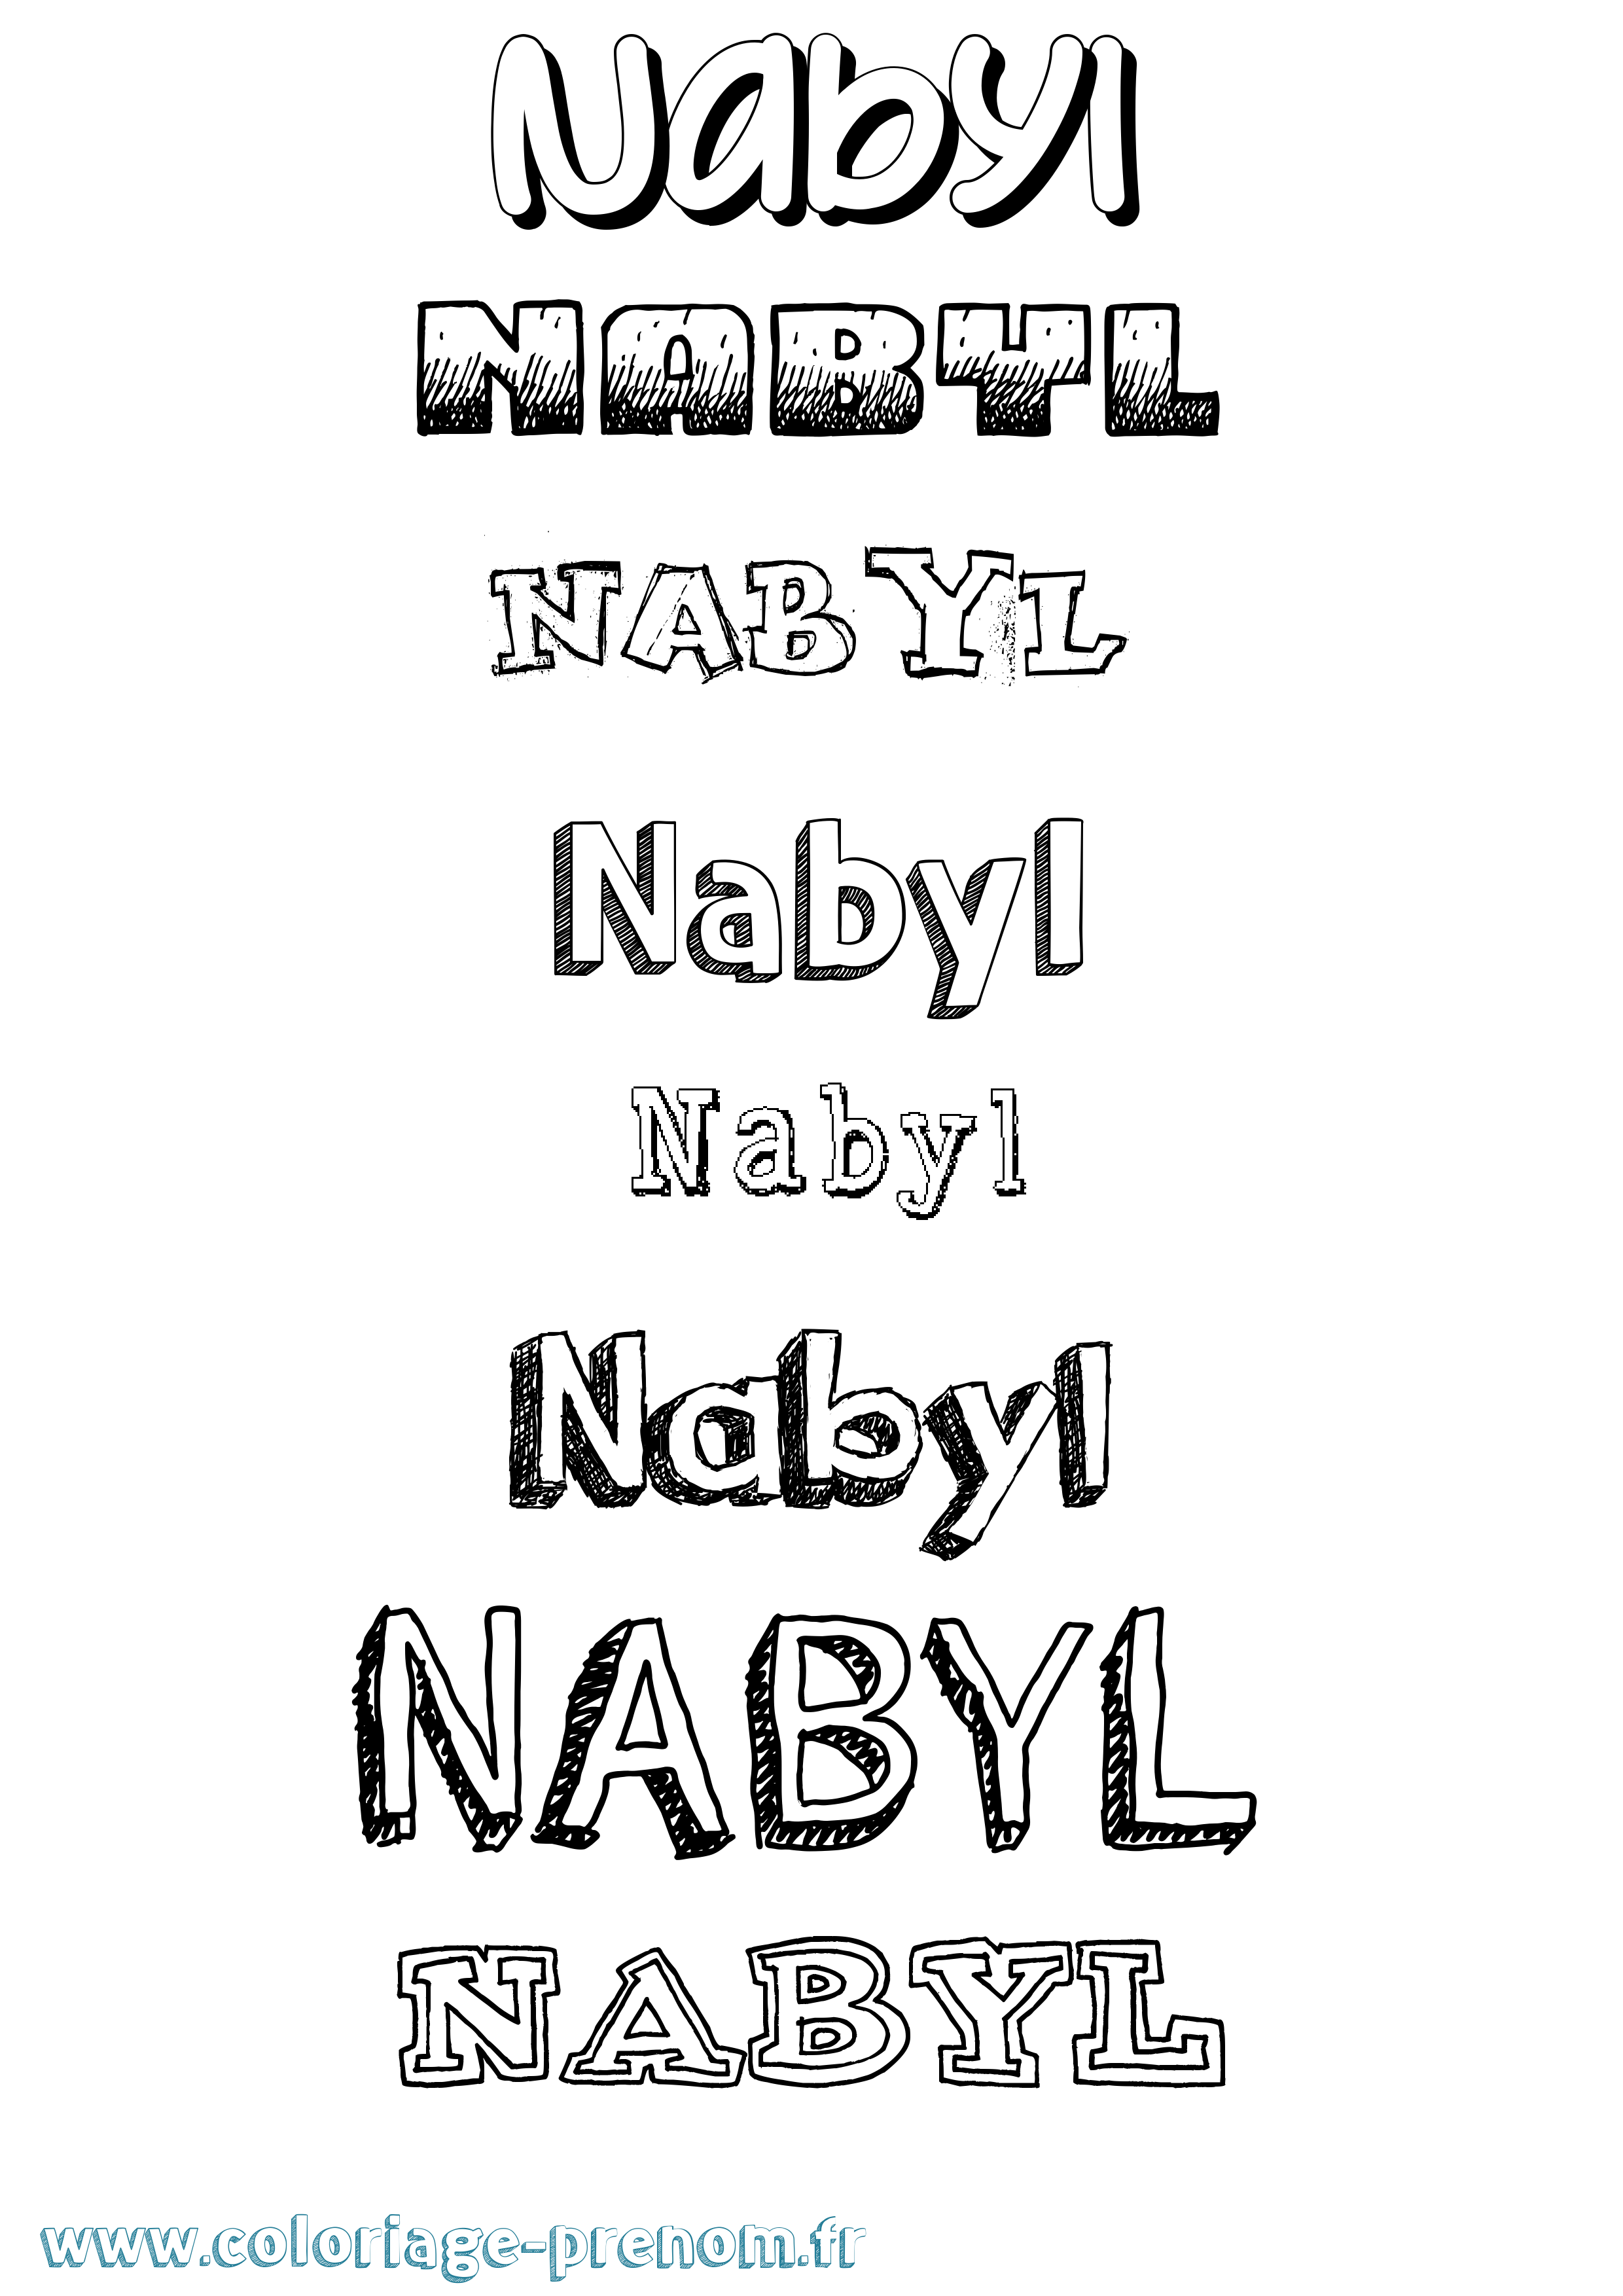 Coloriage prénom Nabyl Dessiné